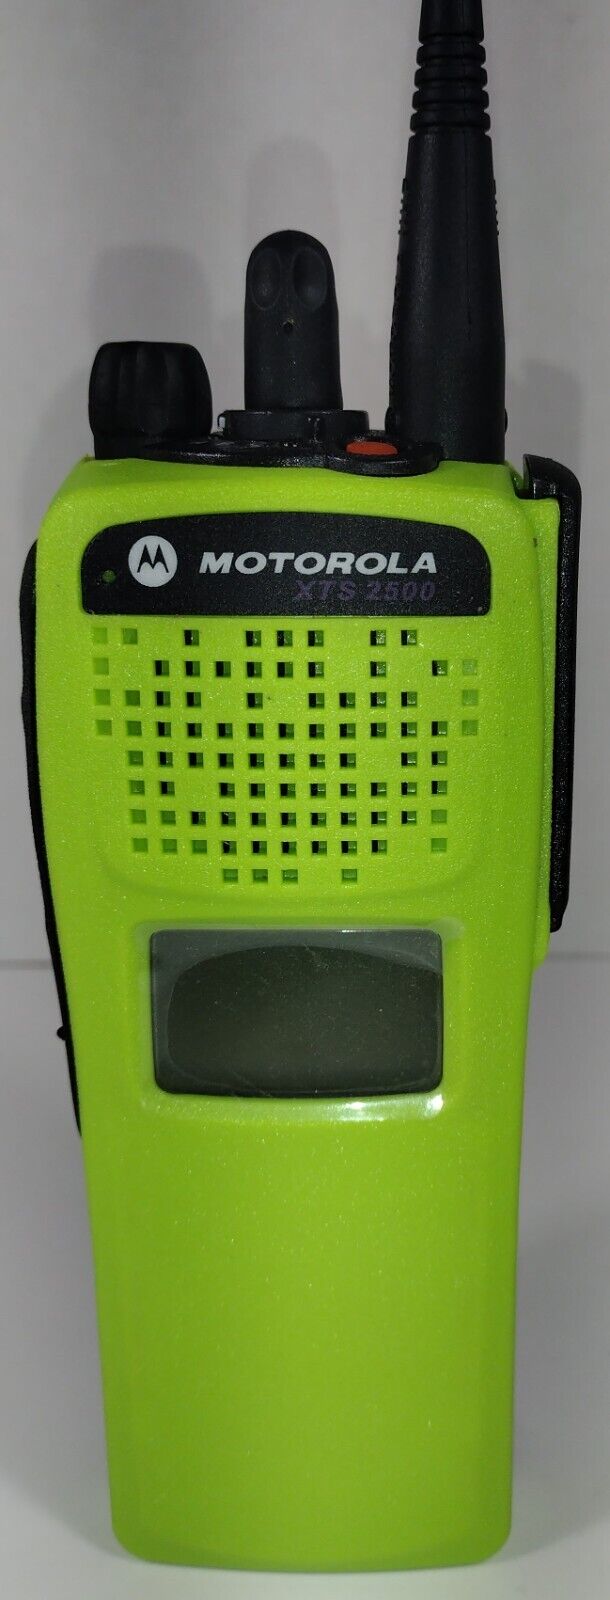 MOTOROLA XTS1500 VHF 136-174MHz SmartZone P25 Digital Two-Way Radio H66KDD9PW5BN